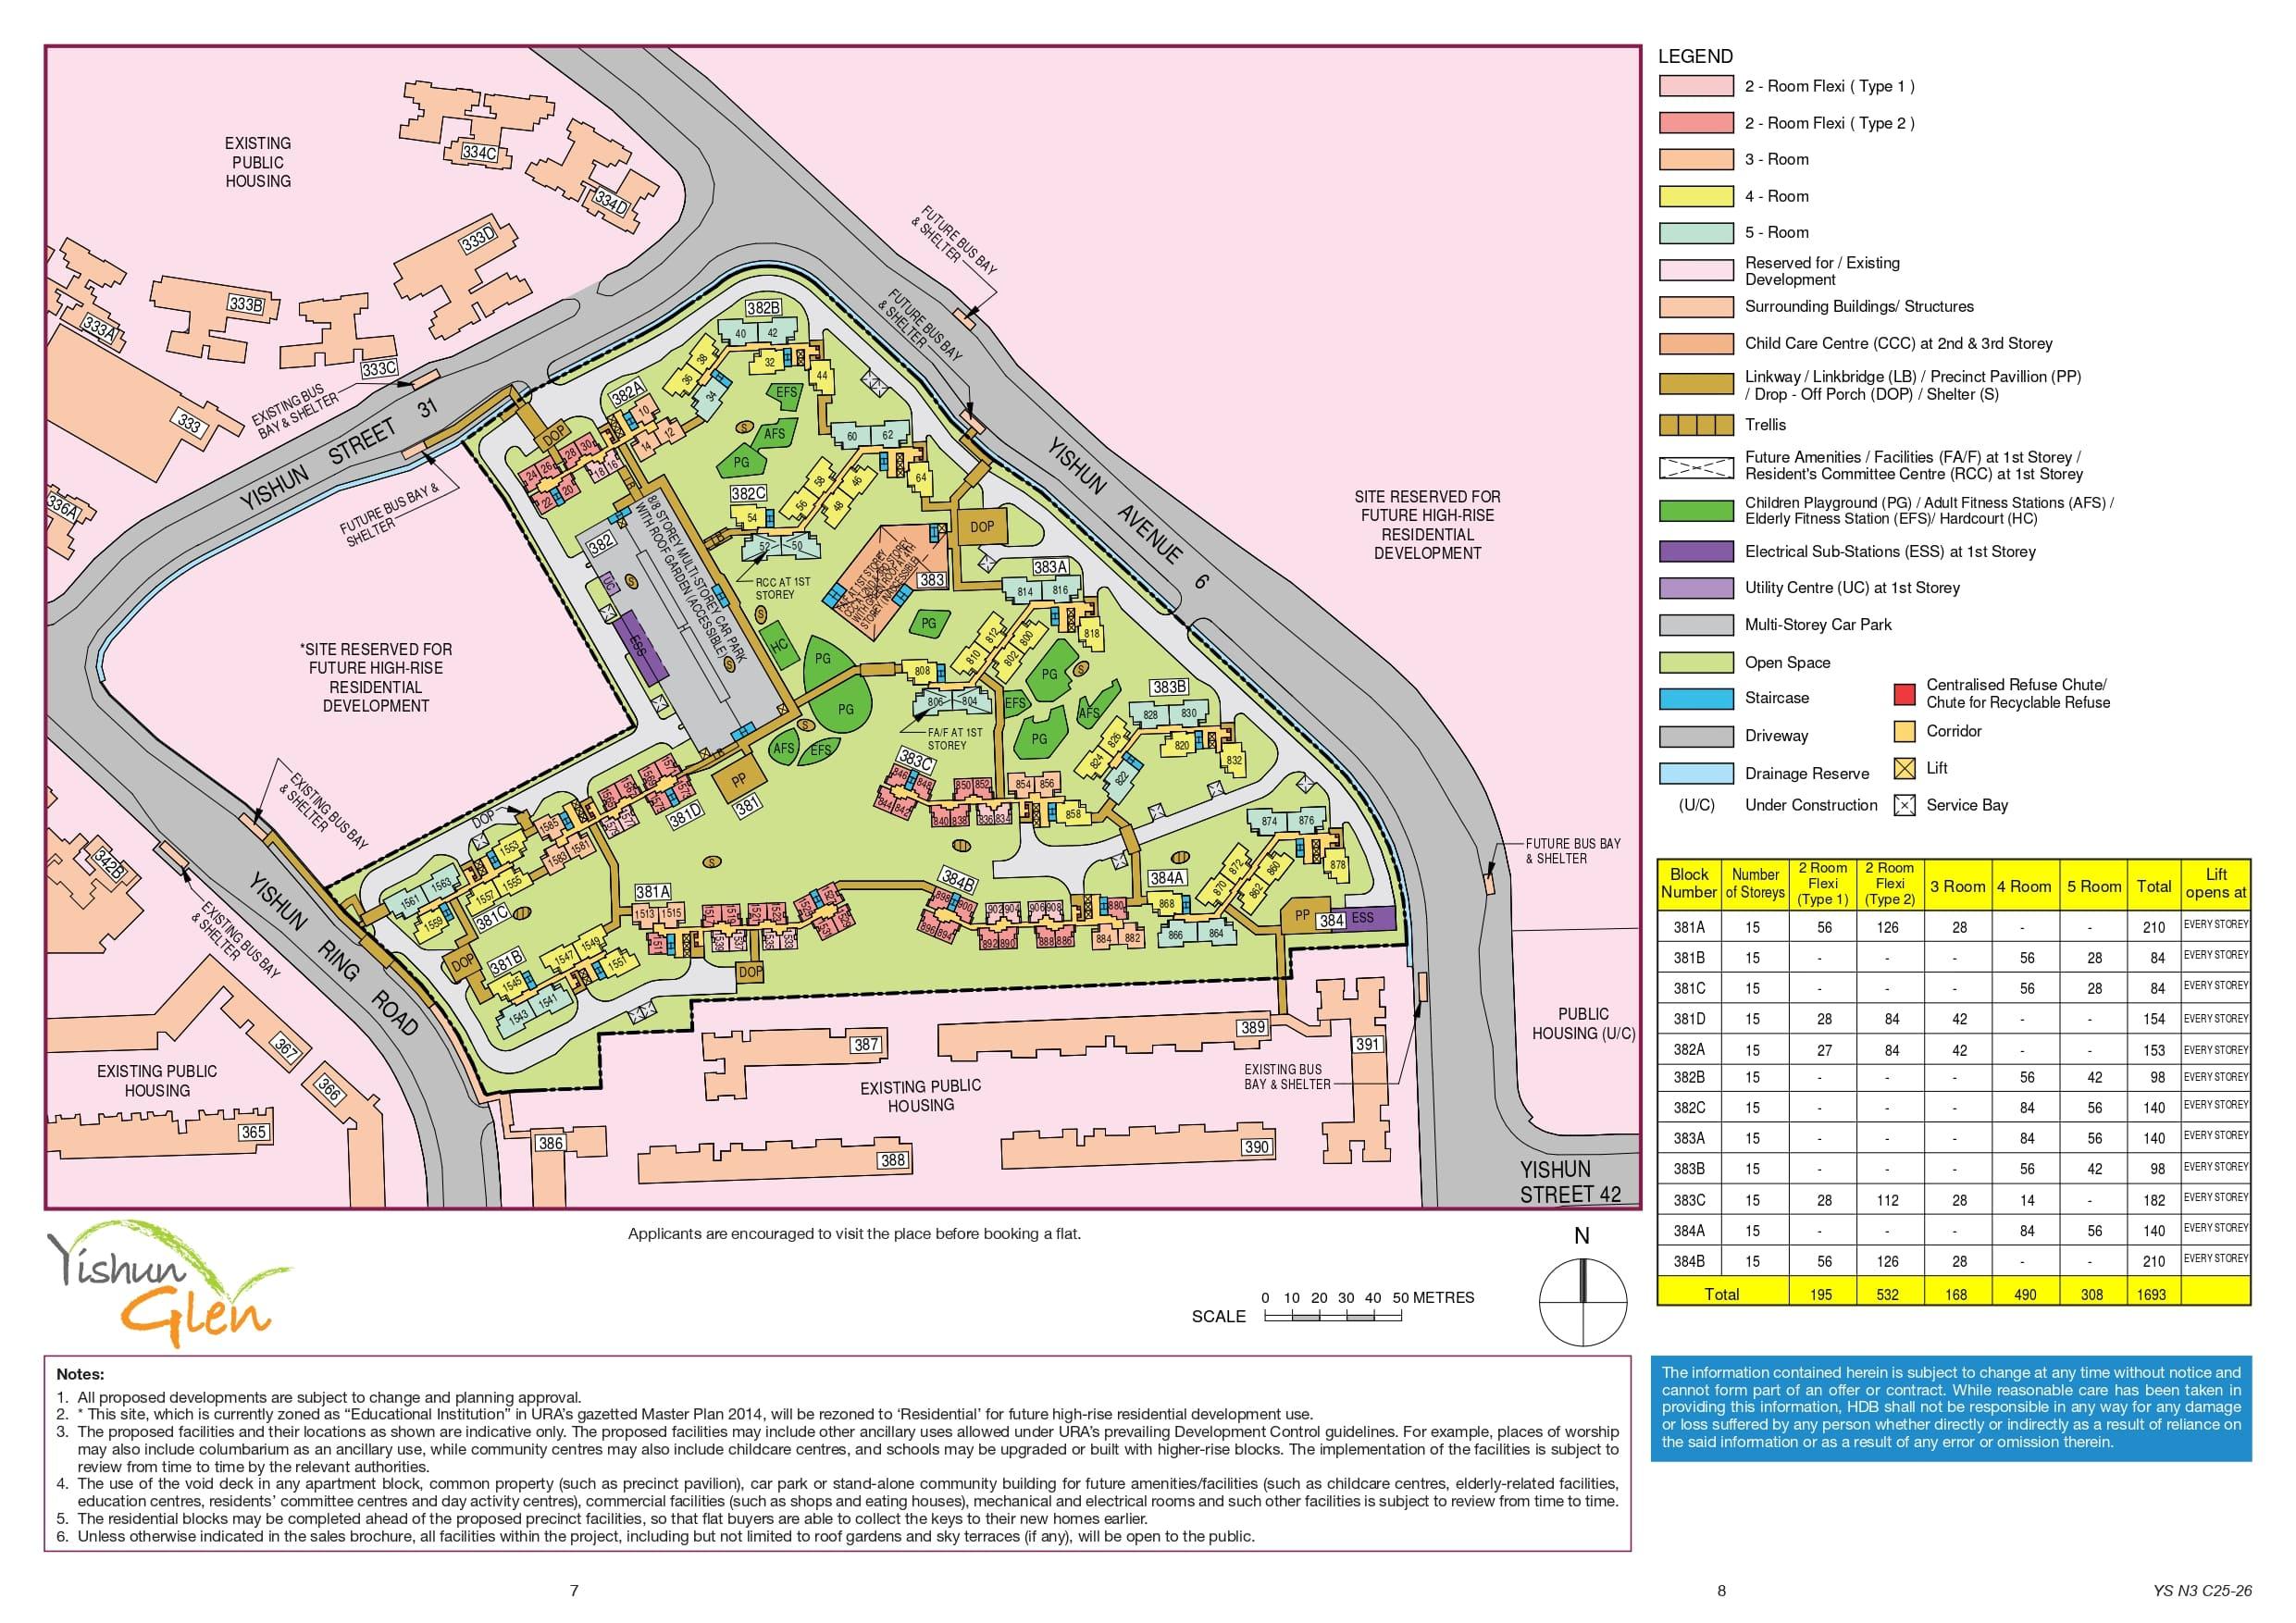 Yishun Glen Site Plan